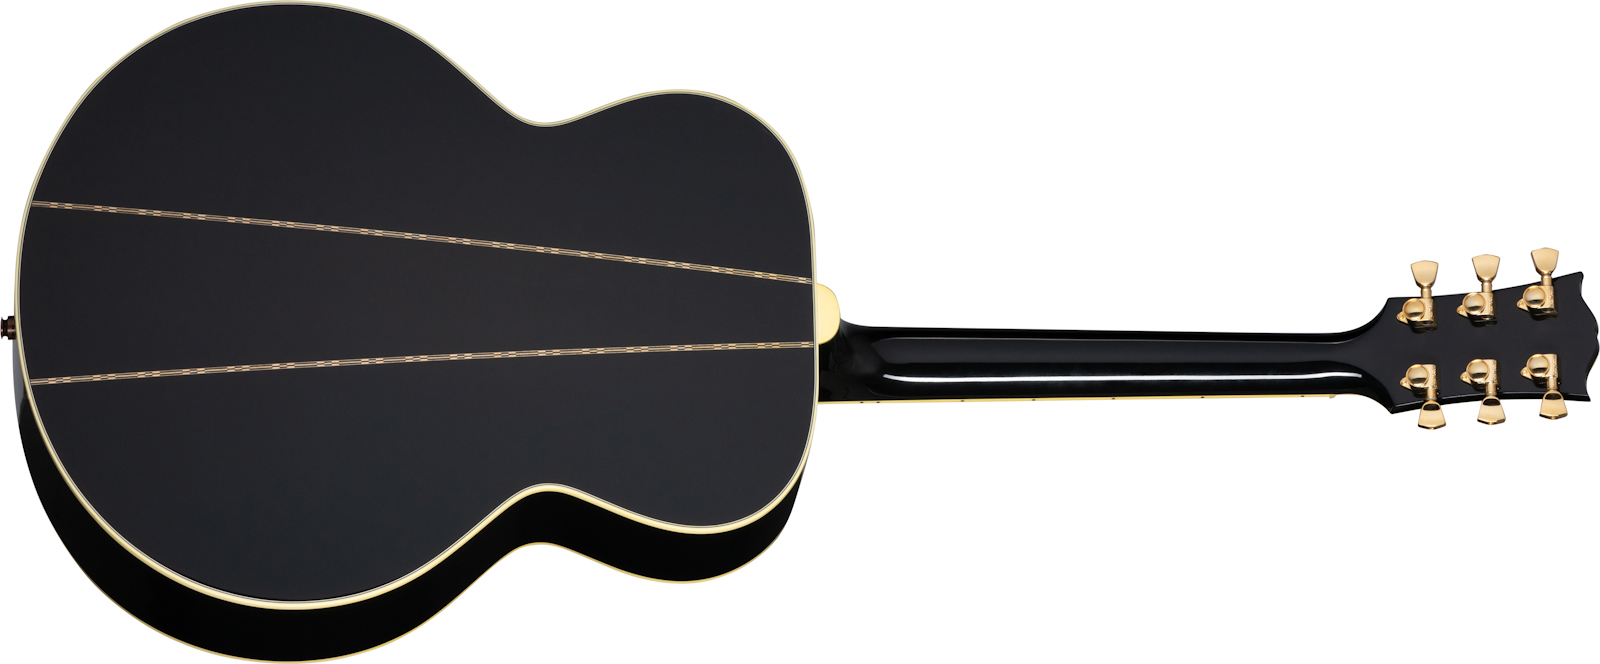 Gibson Custom Shop Elvis Presley Sj-200 Signature Jumbo Epicea Palissandre Rw - Ebony - Westerngitaar & electro - Variation 1